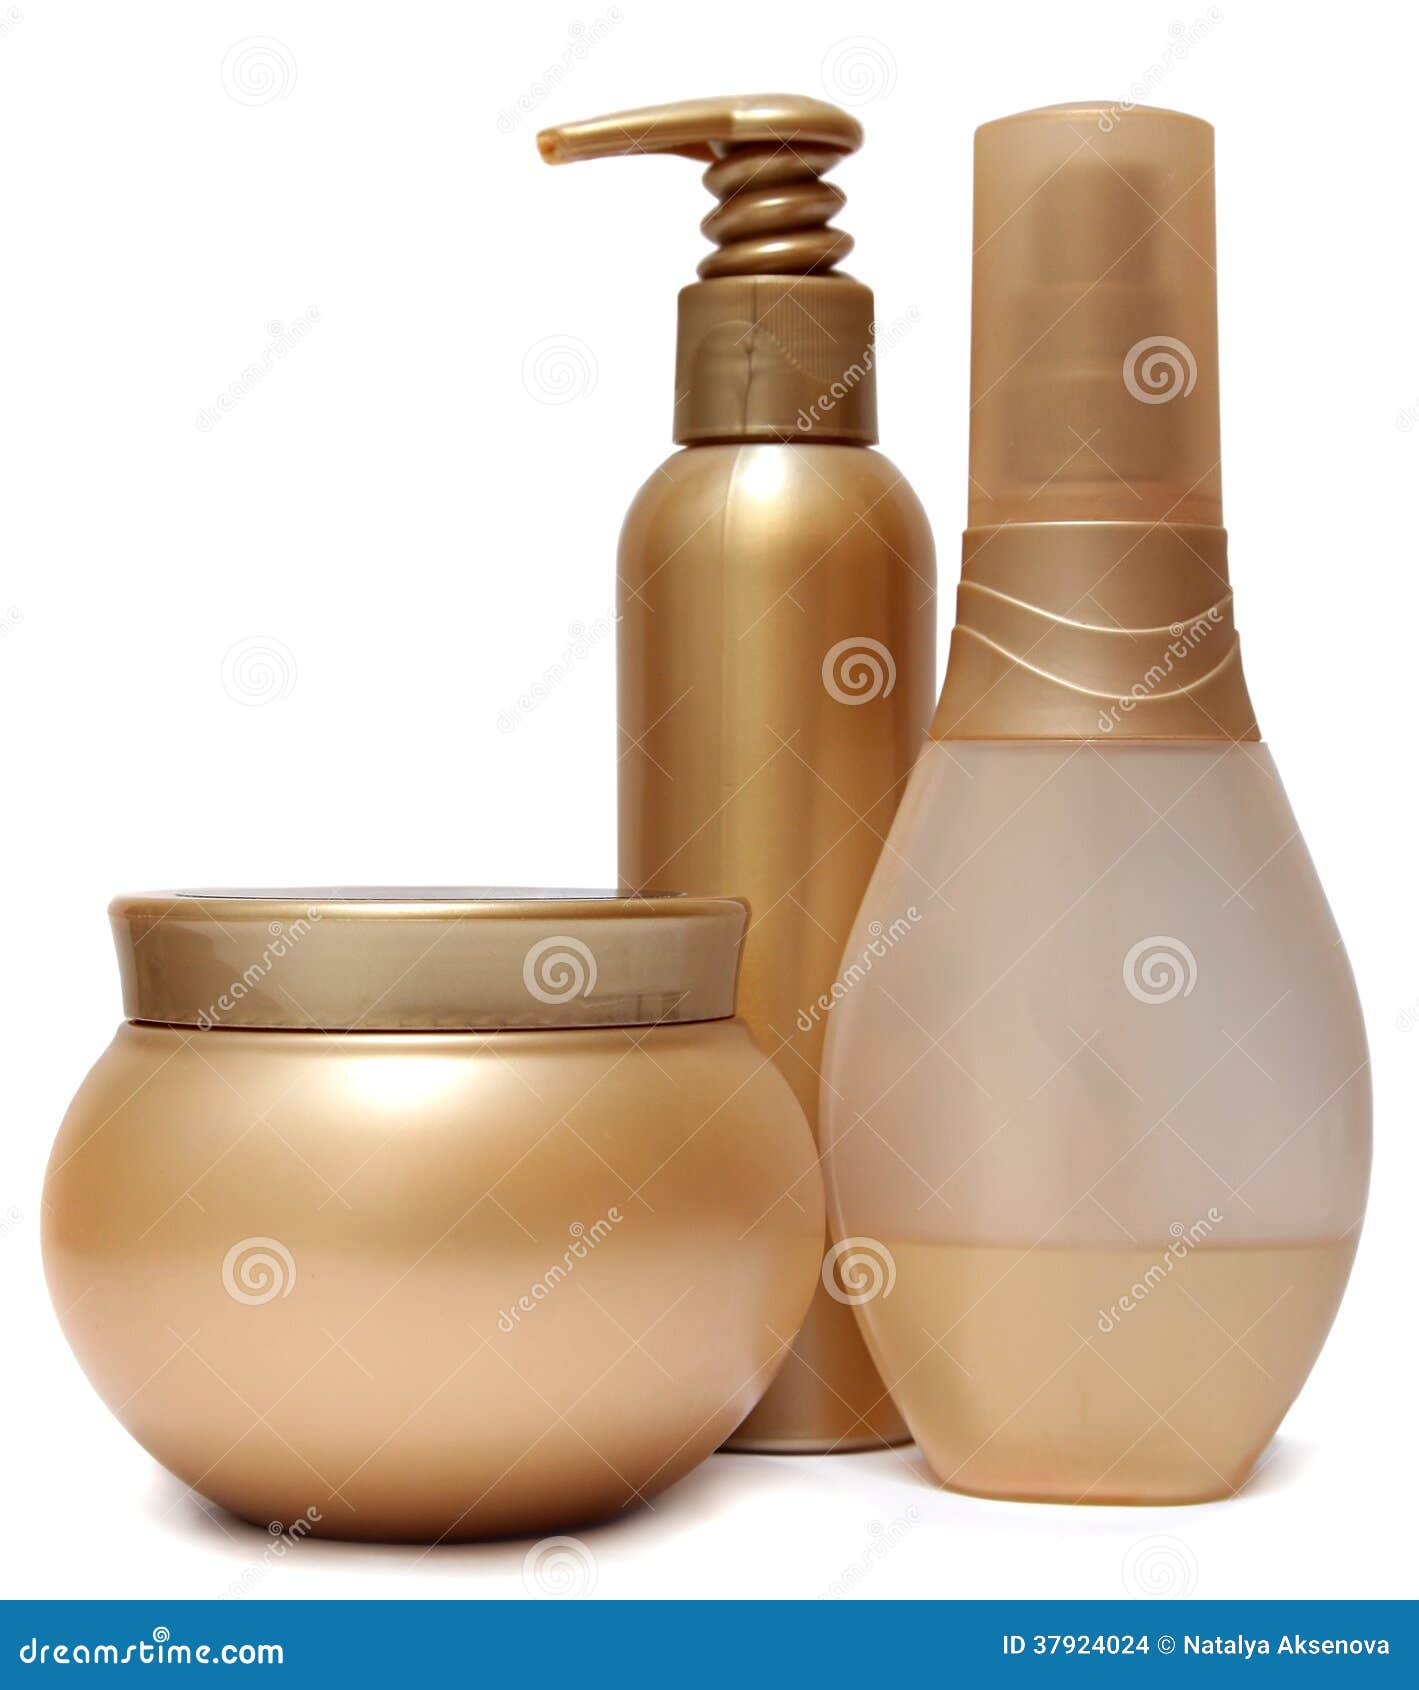 three golden plastic jars and bottles  on